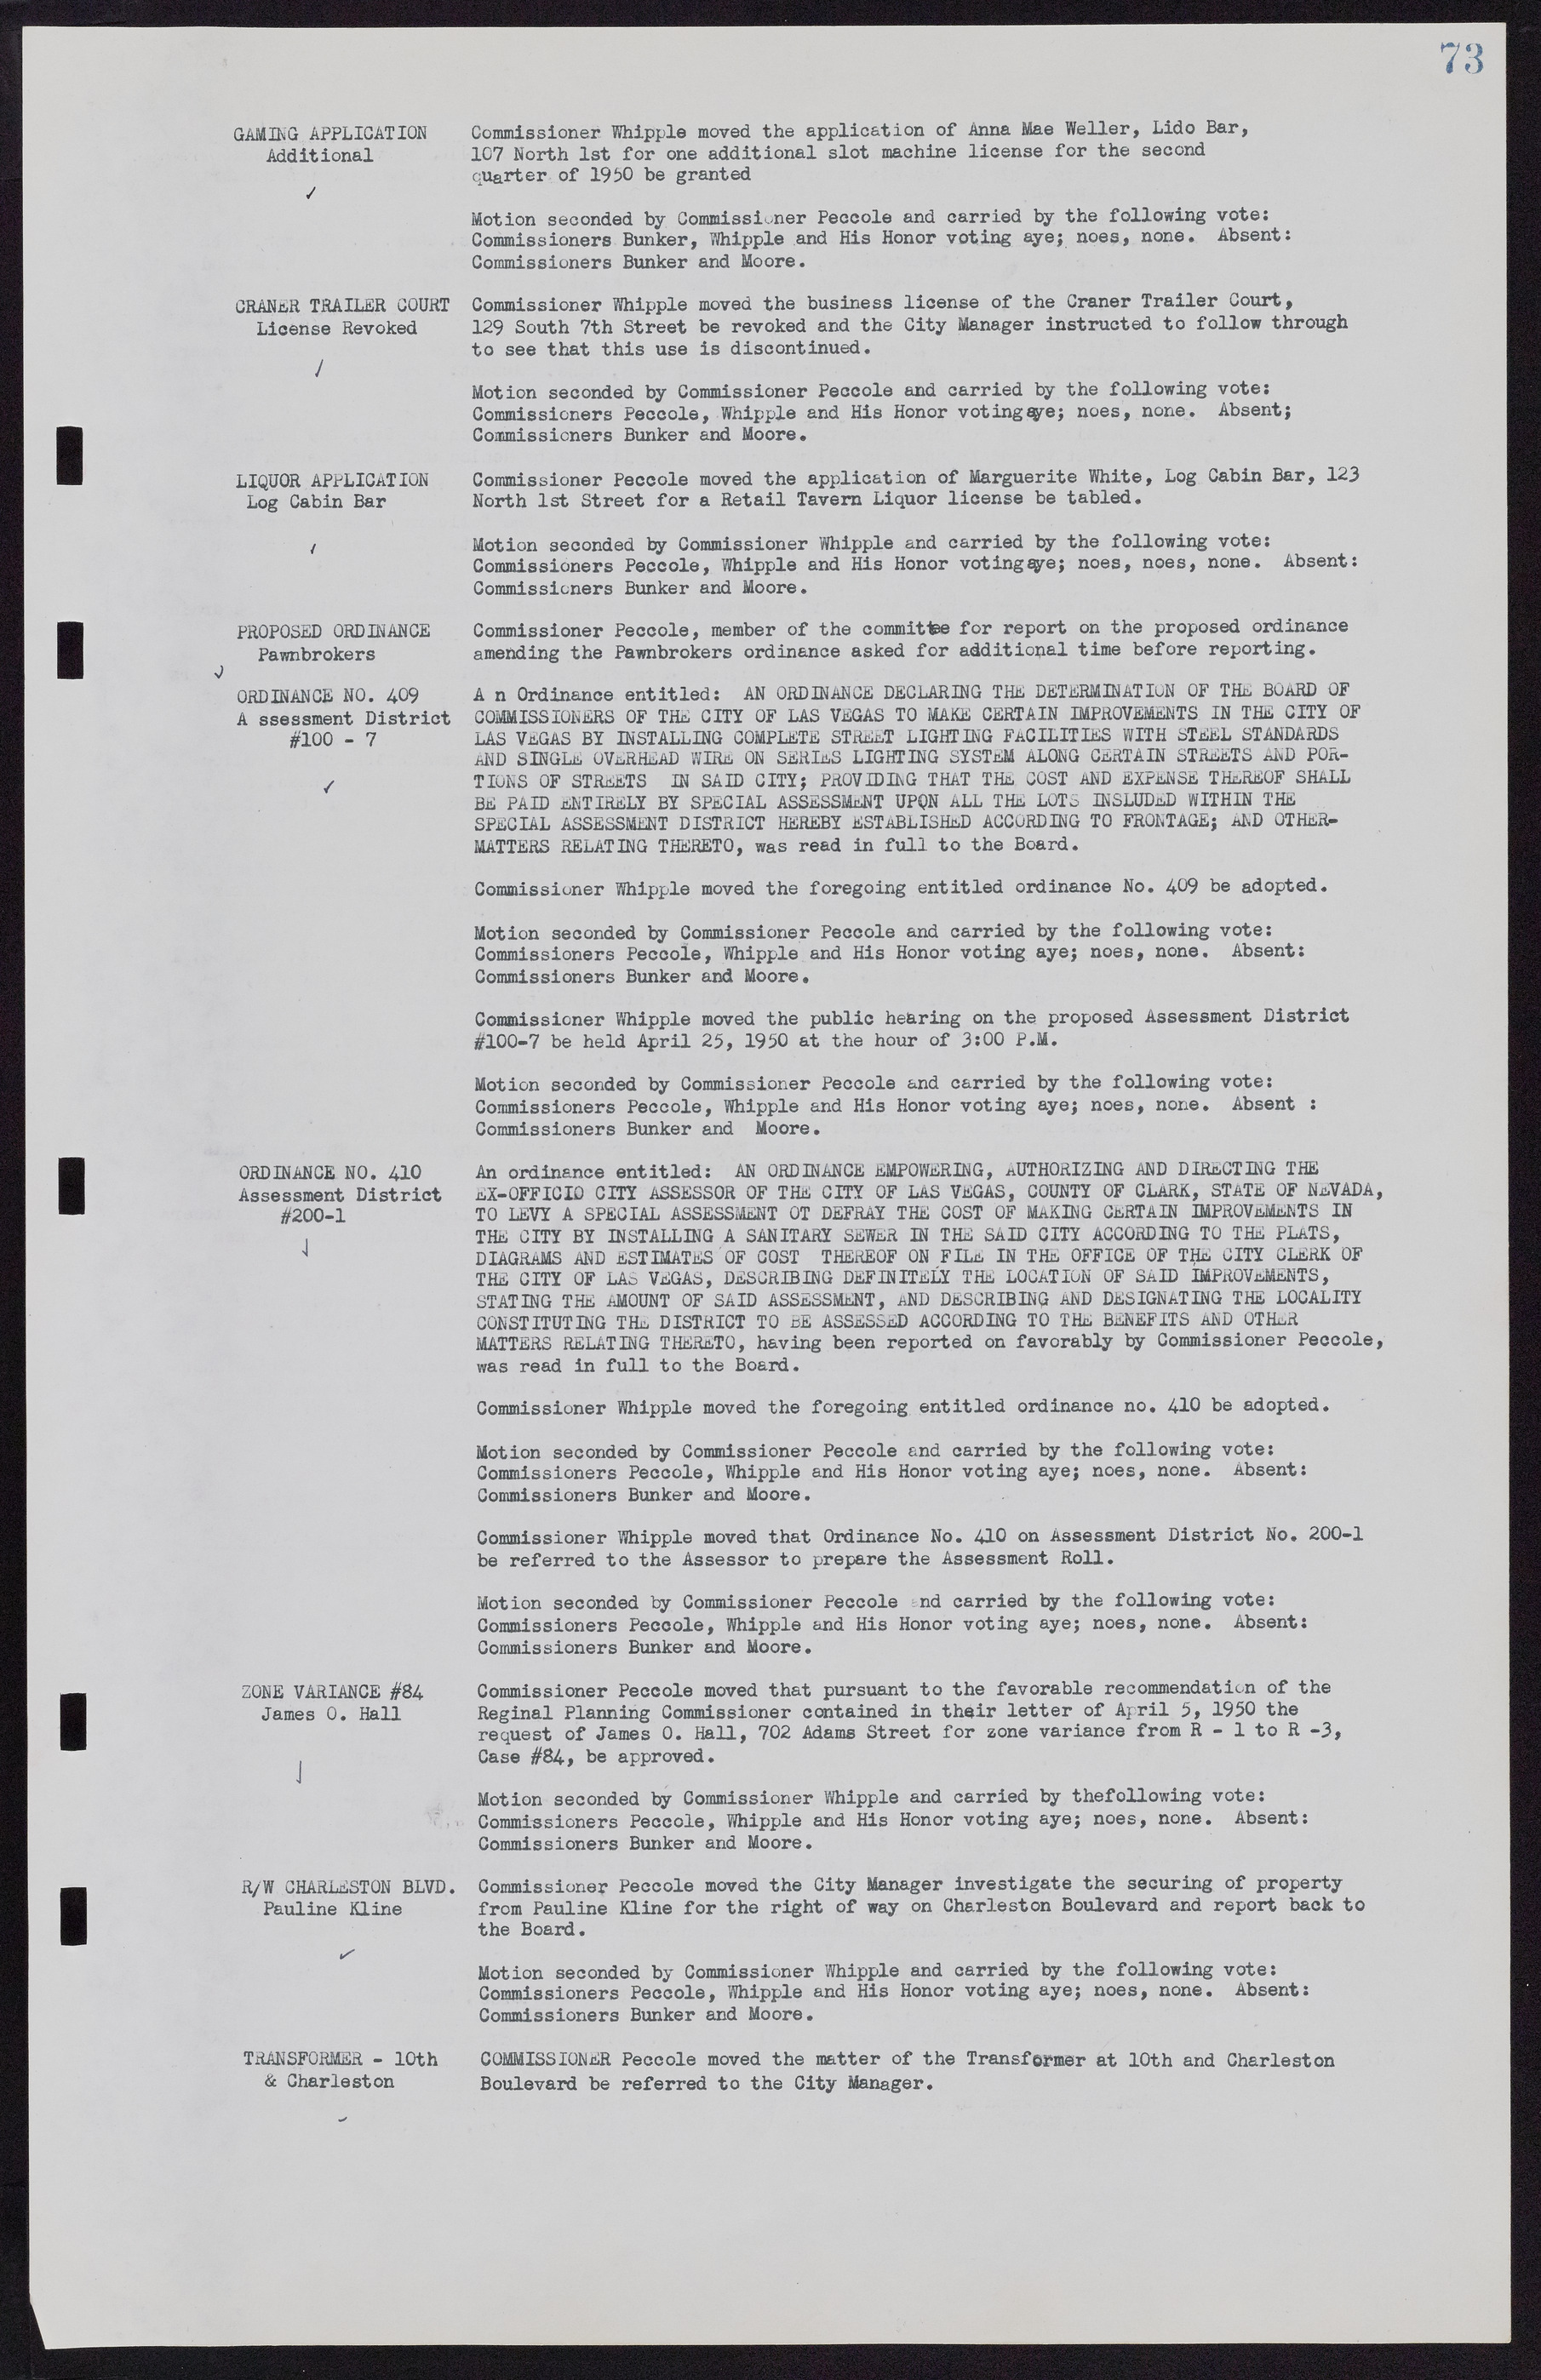 Las Vegas City Commission Minutes, November 7, 1949 to May 21, 1952, lvc000007-81